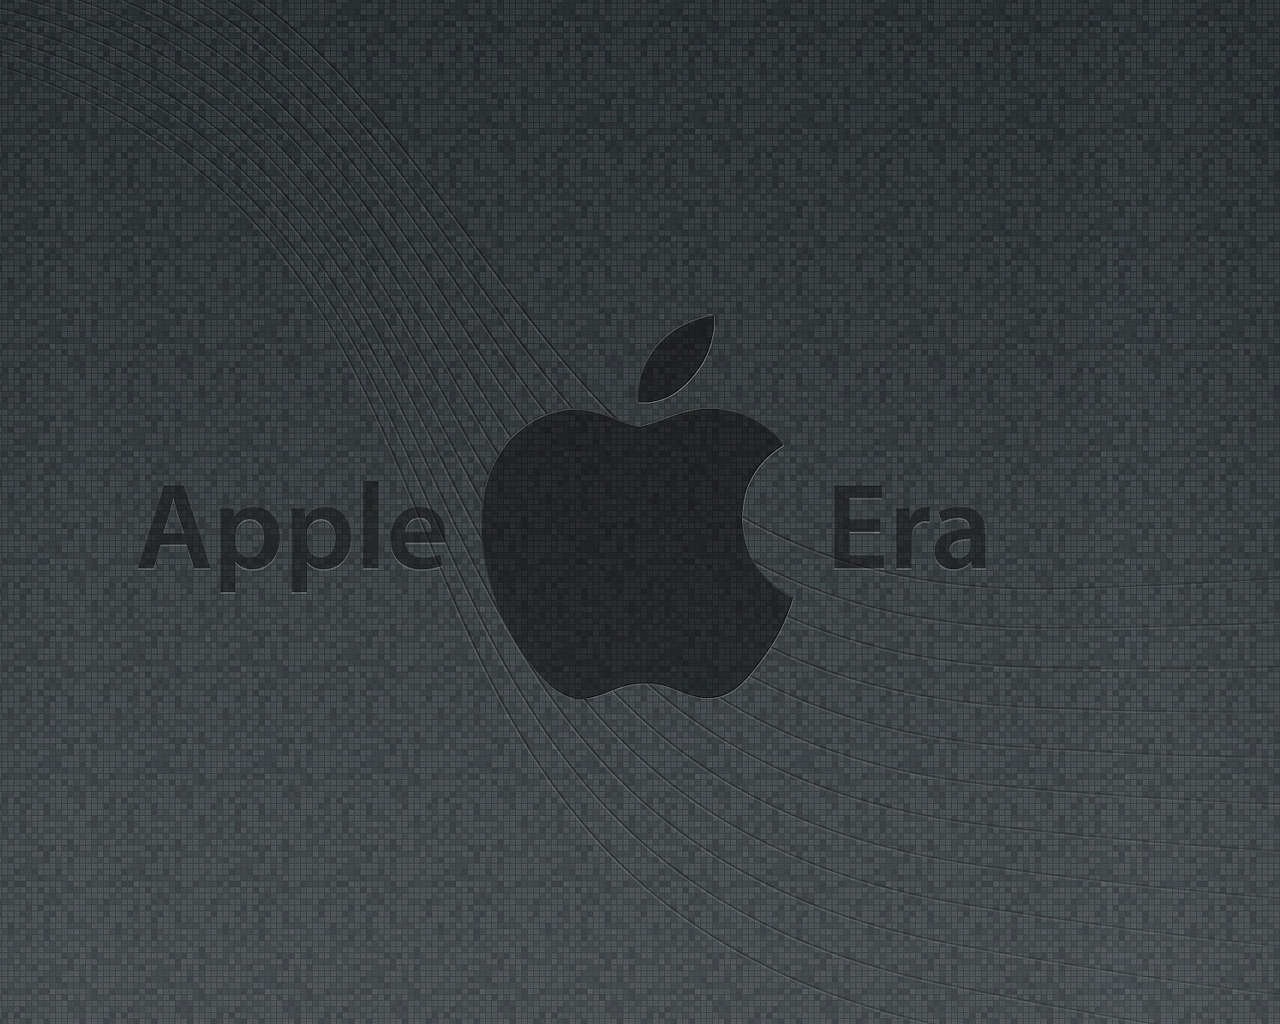 Apple Era for 1280 x 1024 resolution